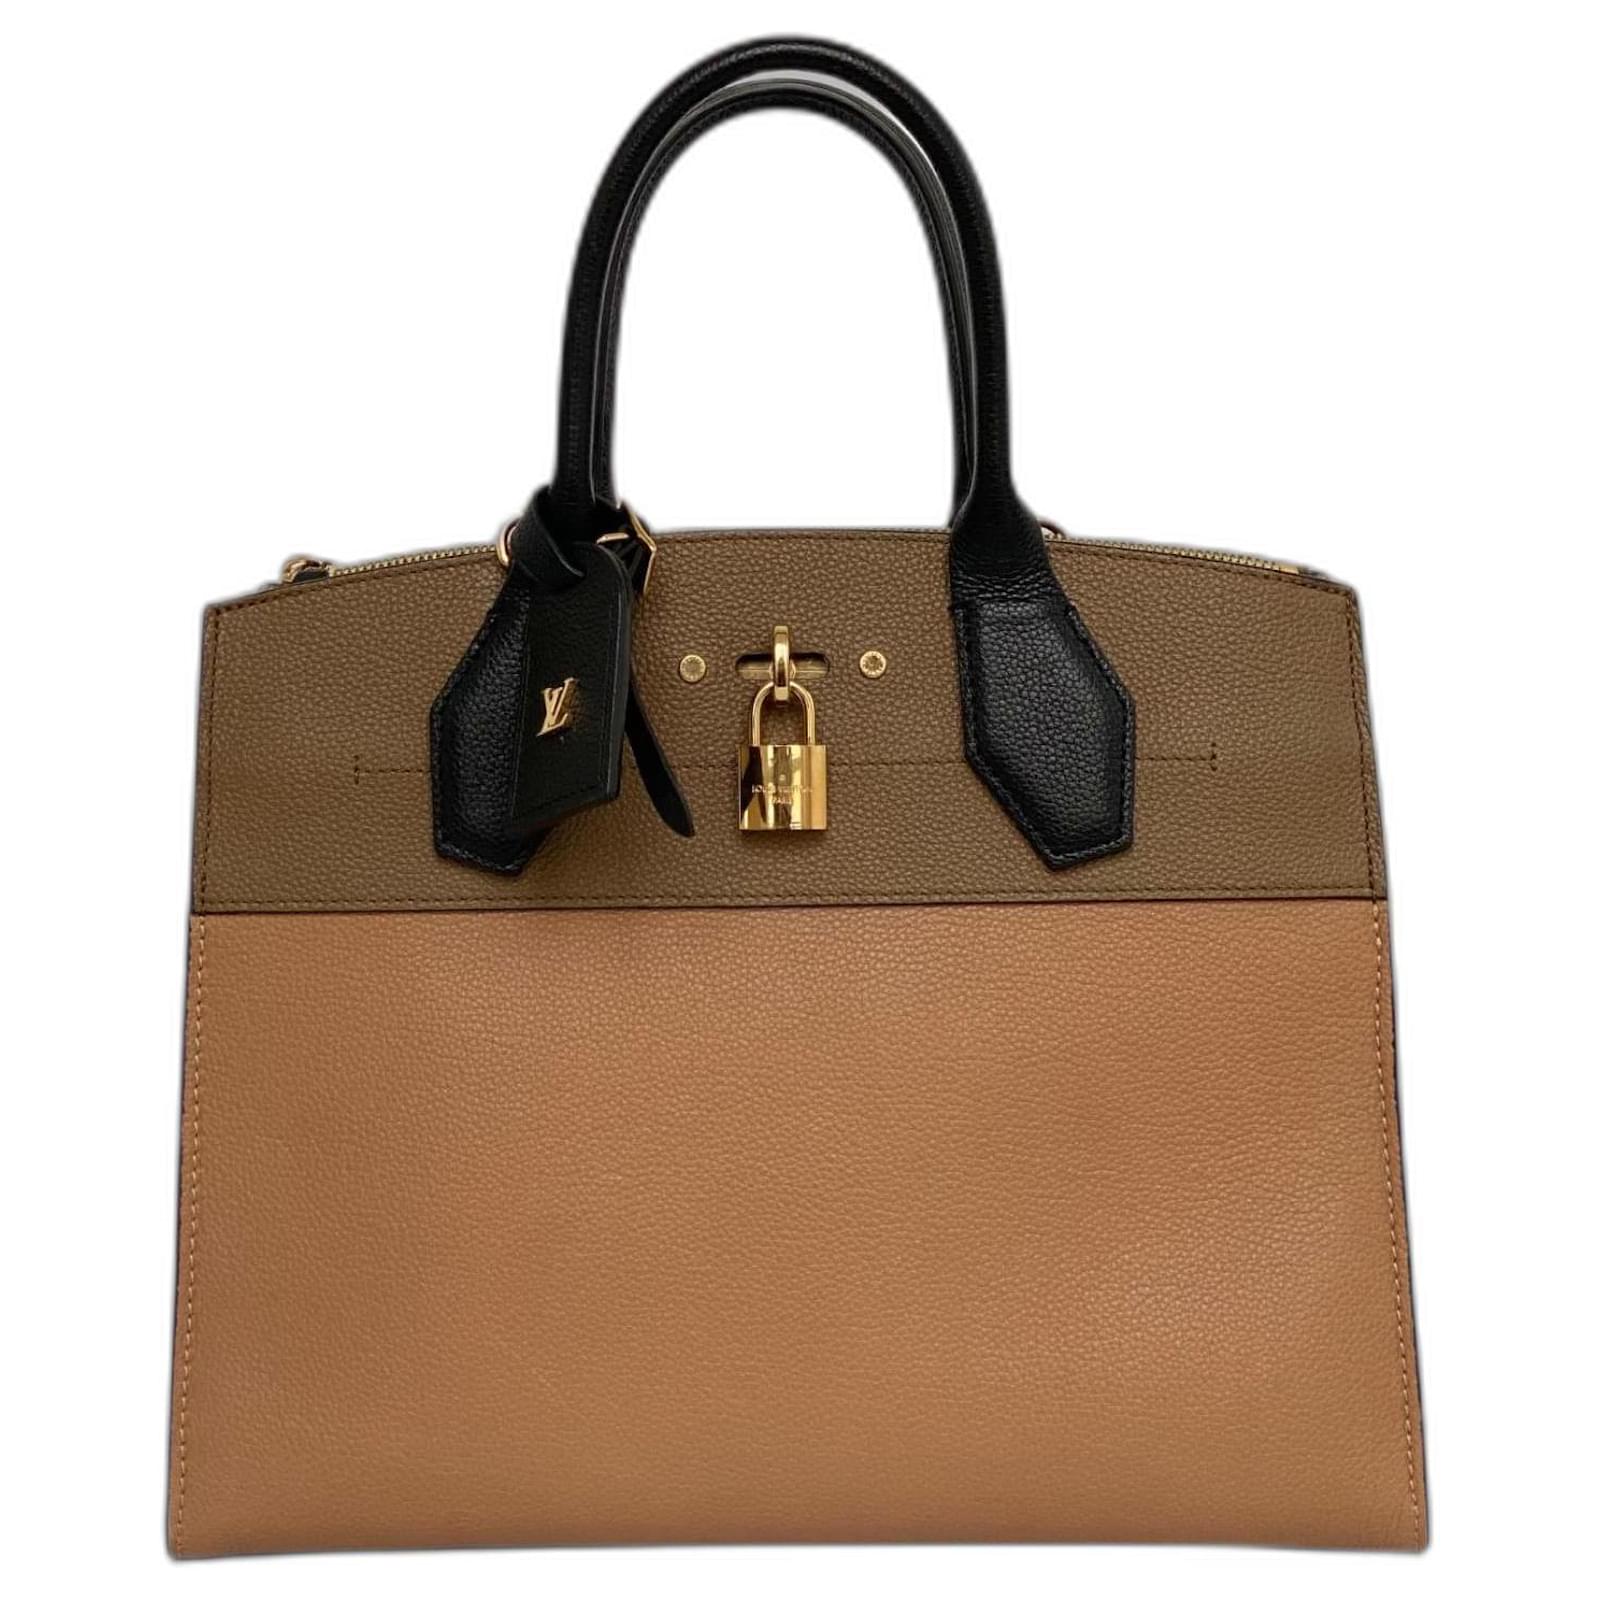 Handbags Louis Vuitton Louis Vuitton City Steamer mm